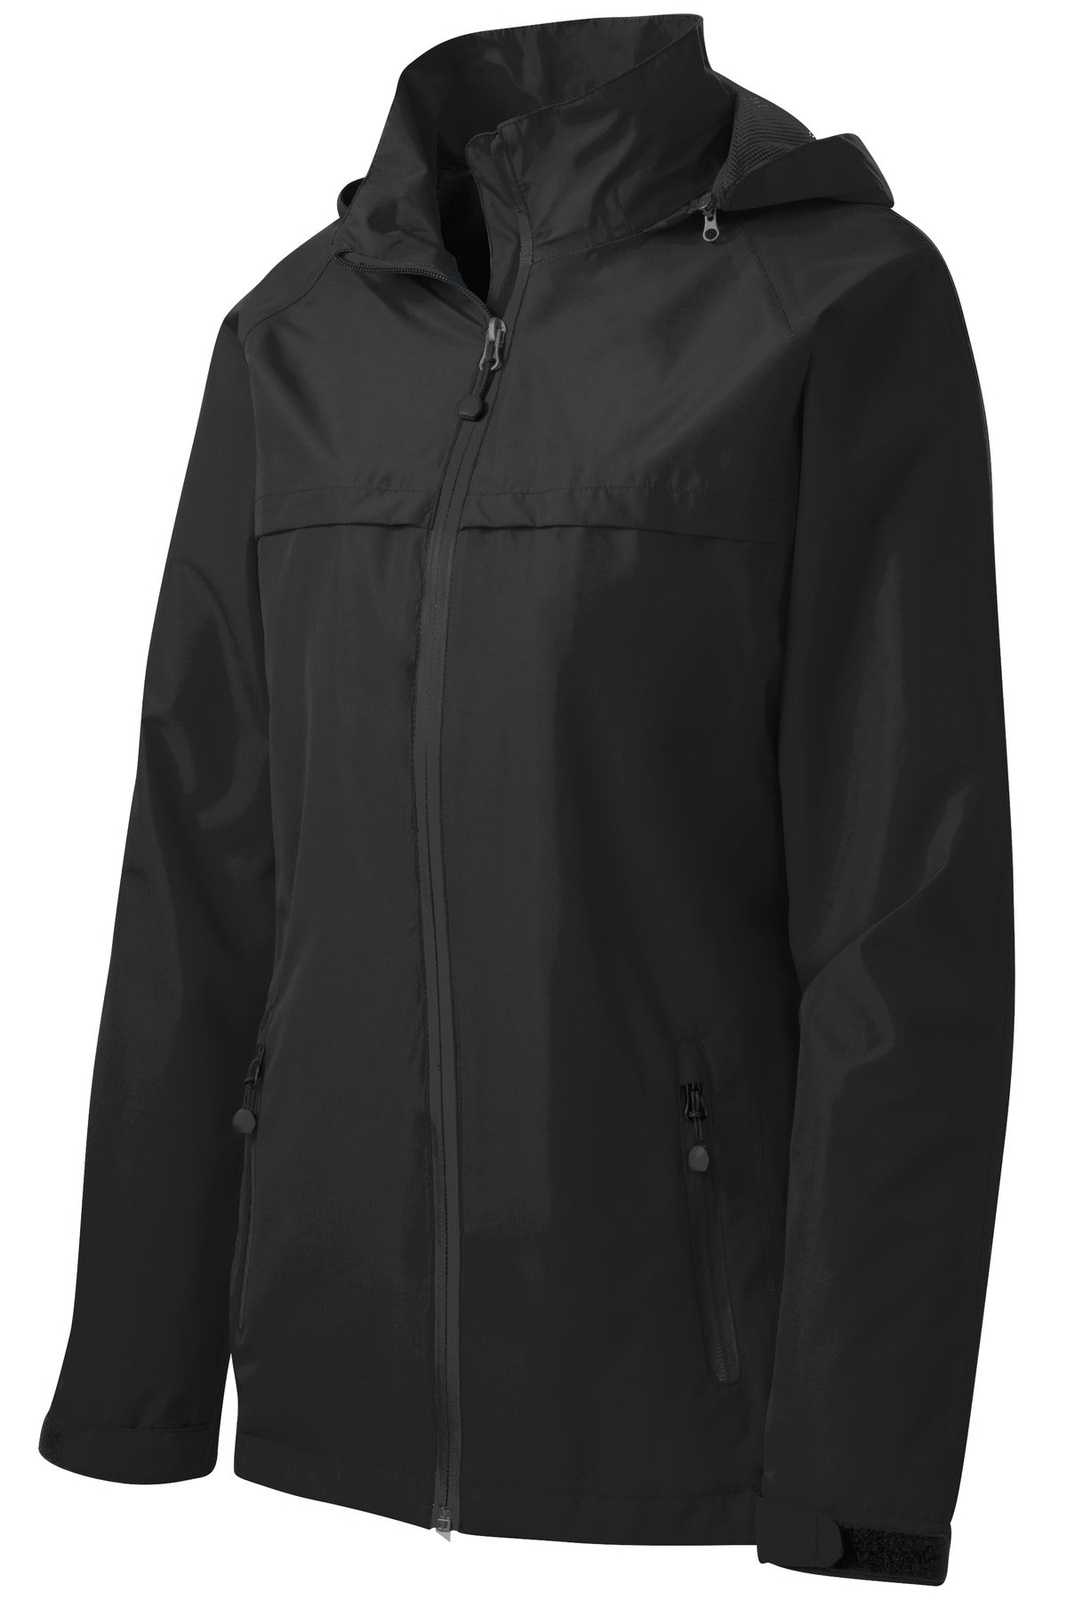 Port Authority L333 Ladies Torrent Waterproof Jacket - Black - HIT a Double - 5